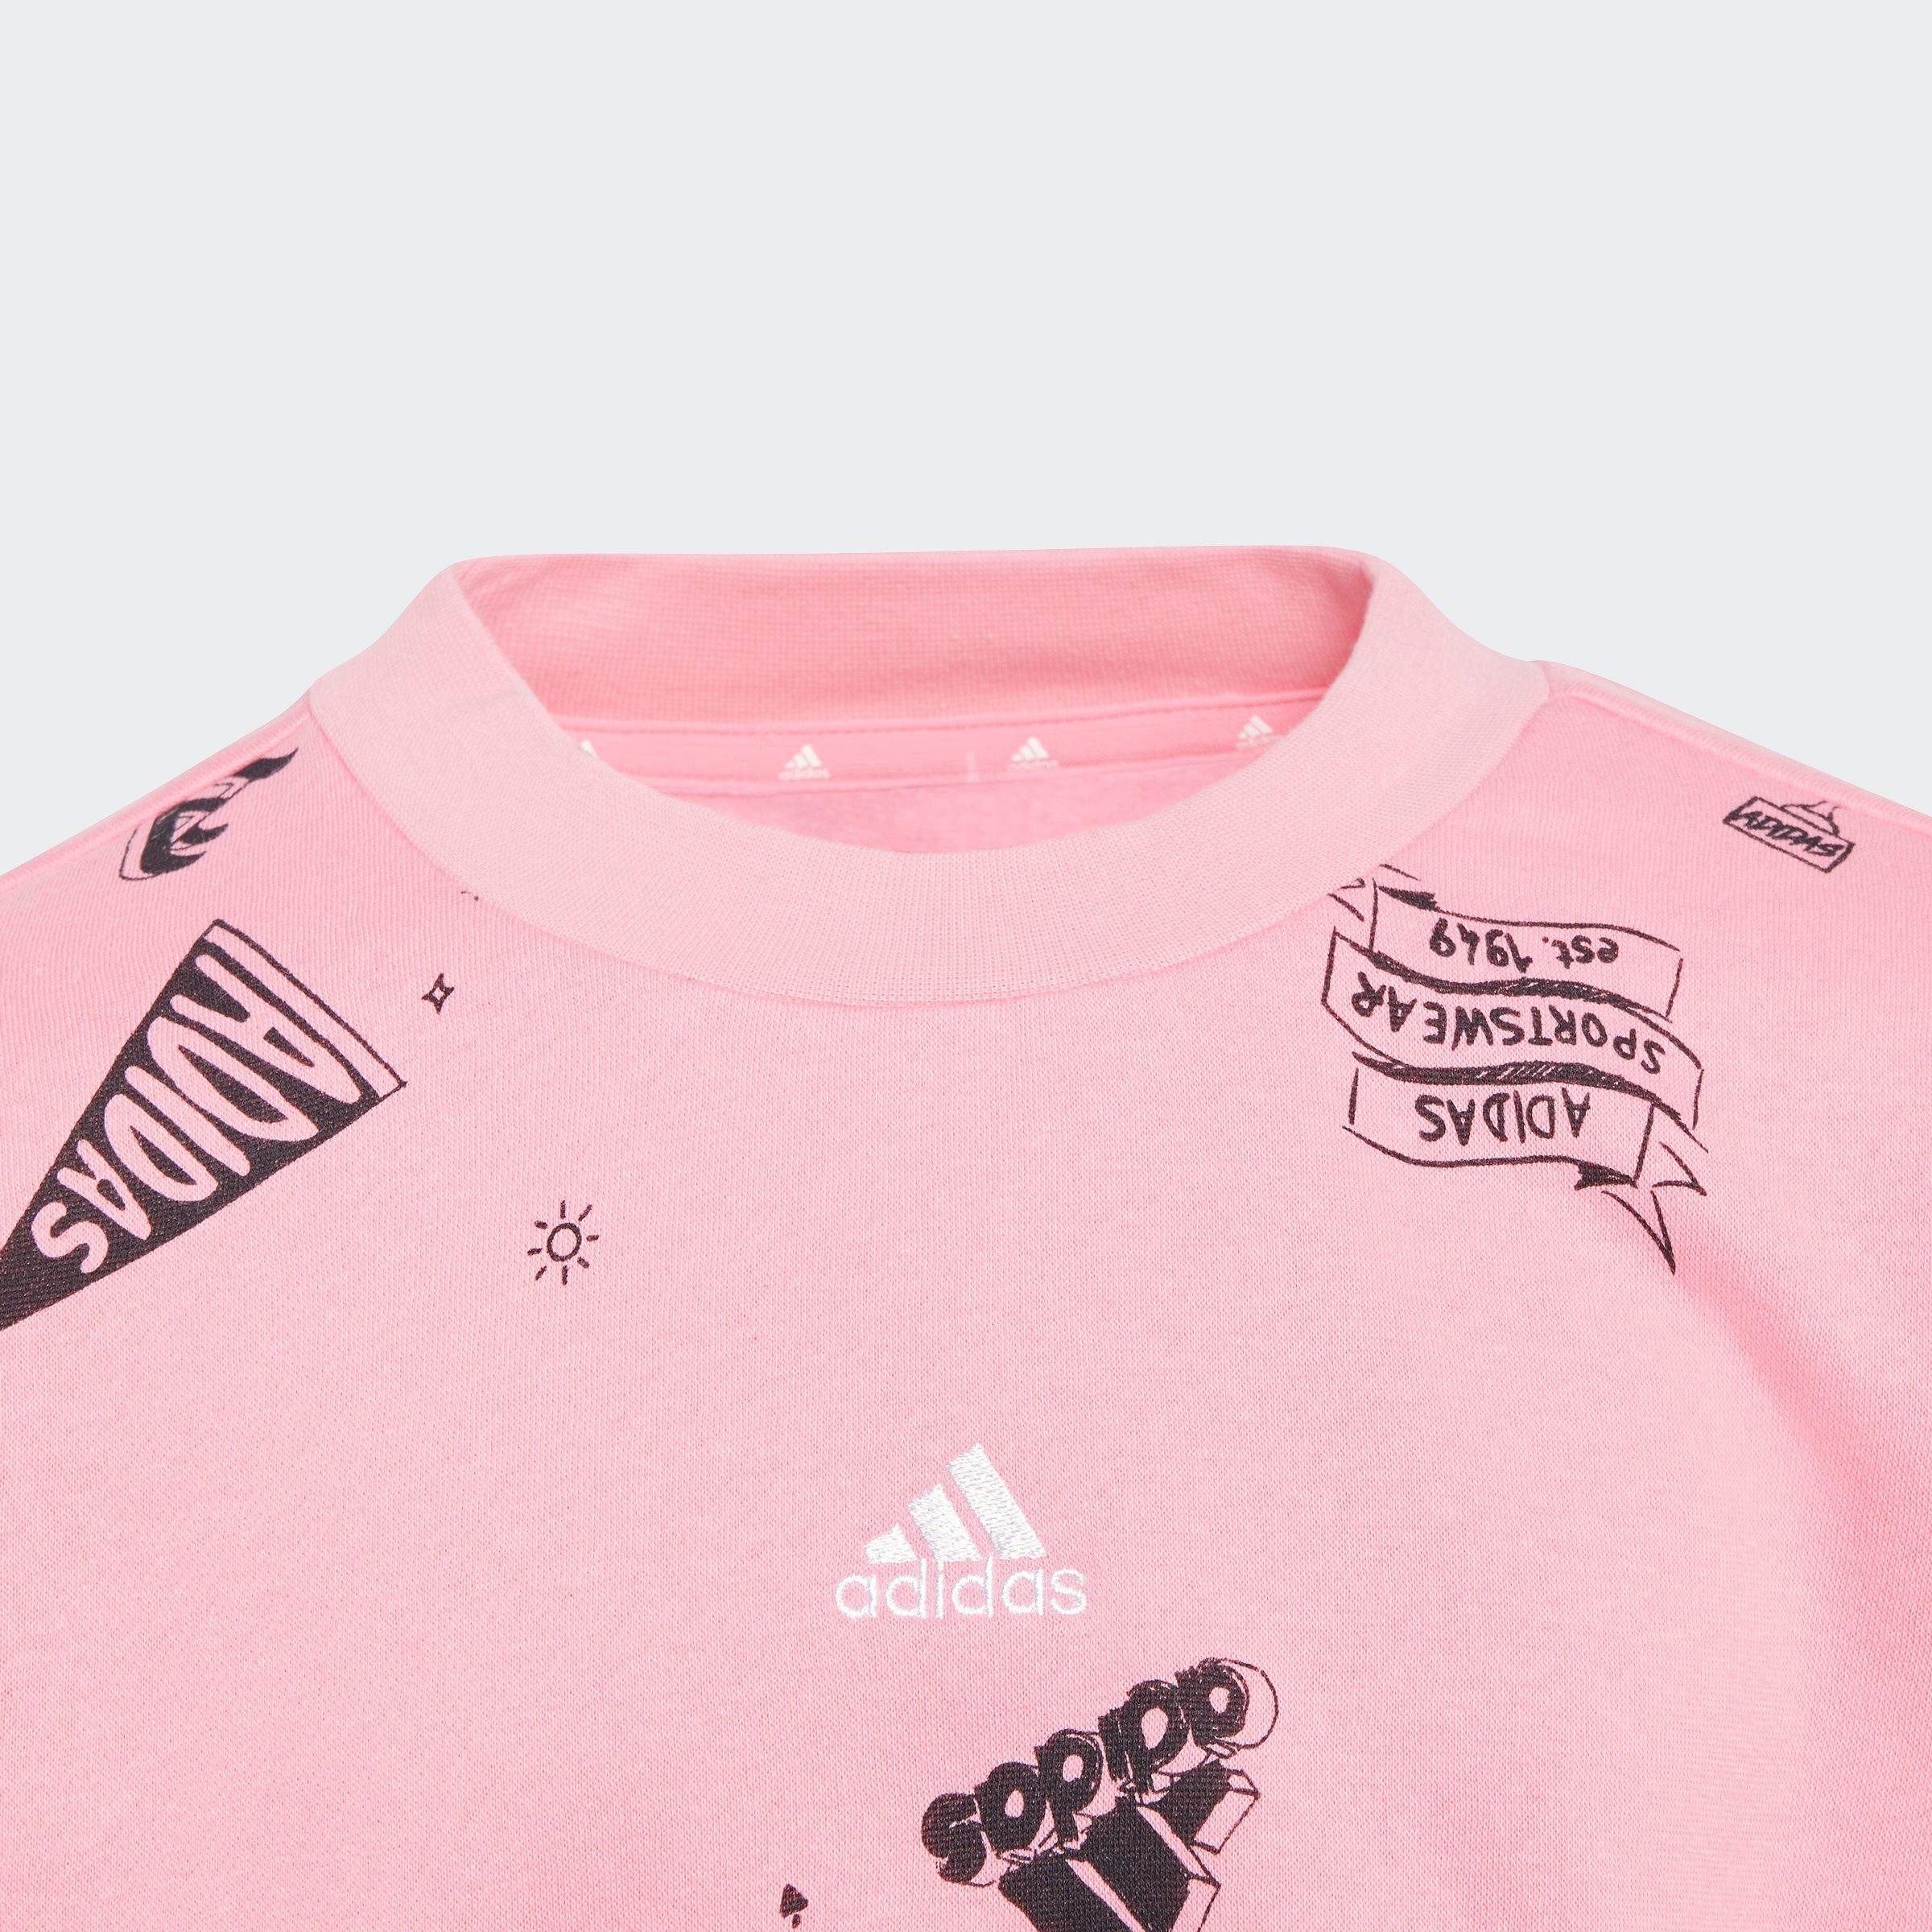 PRINT Bliss Pink Black / ALLOVER Sweatshirt BRAND KIDS Sportswear adidas LOVE